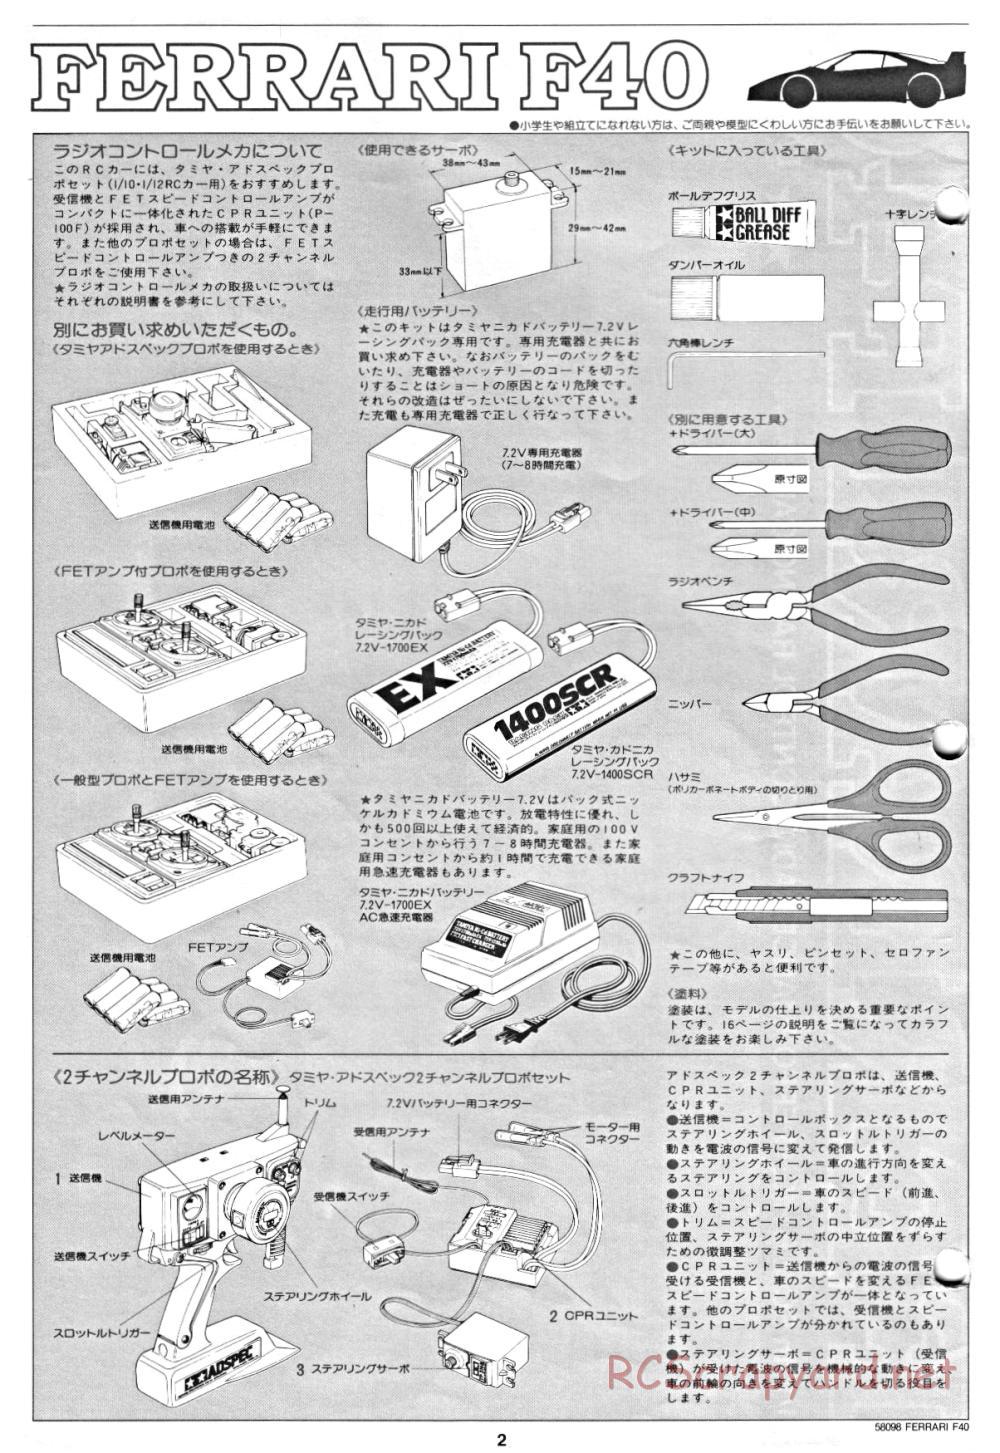 Tamiya - Ferrari F40 - 58098 - Manual - Page 2